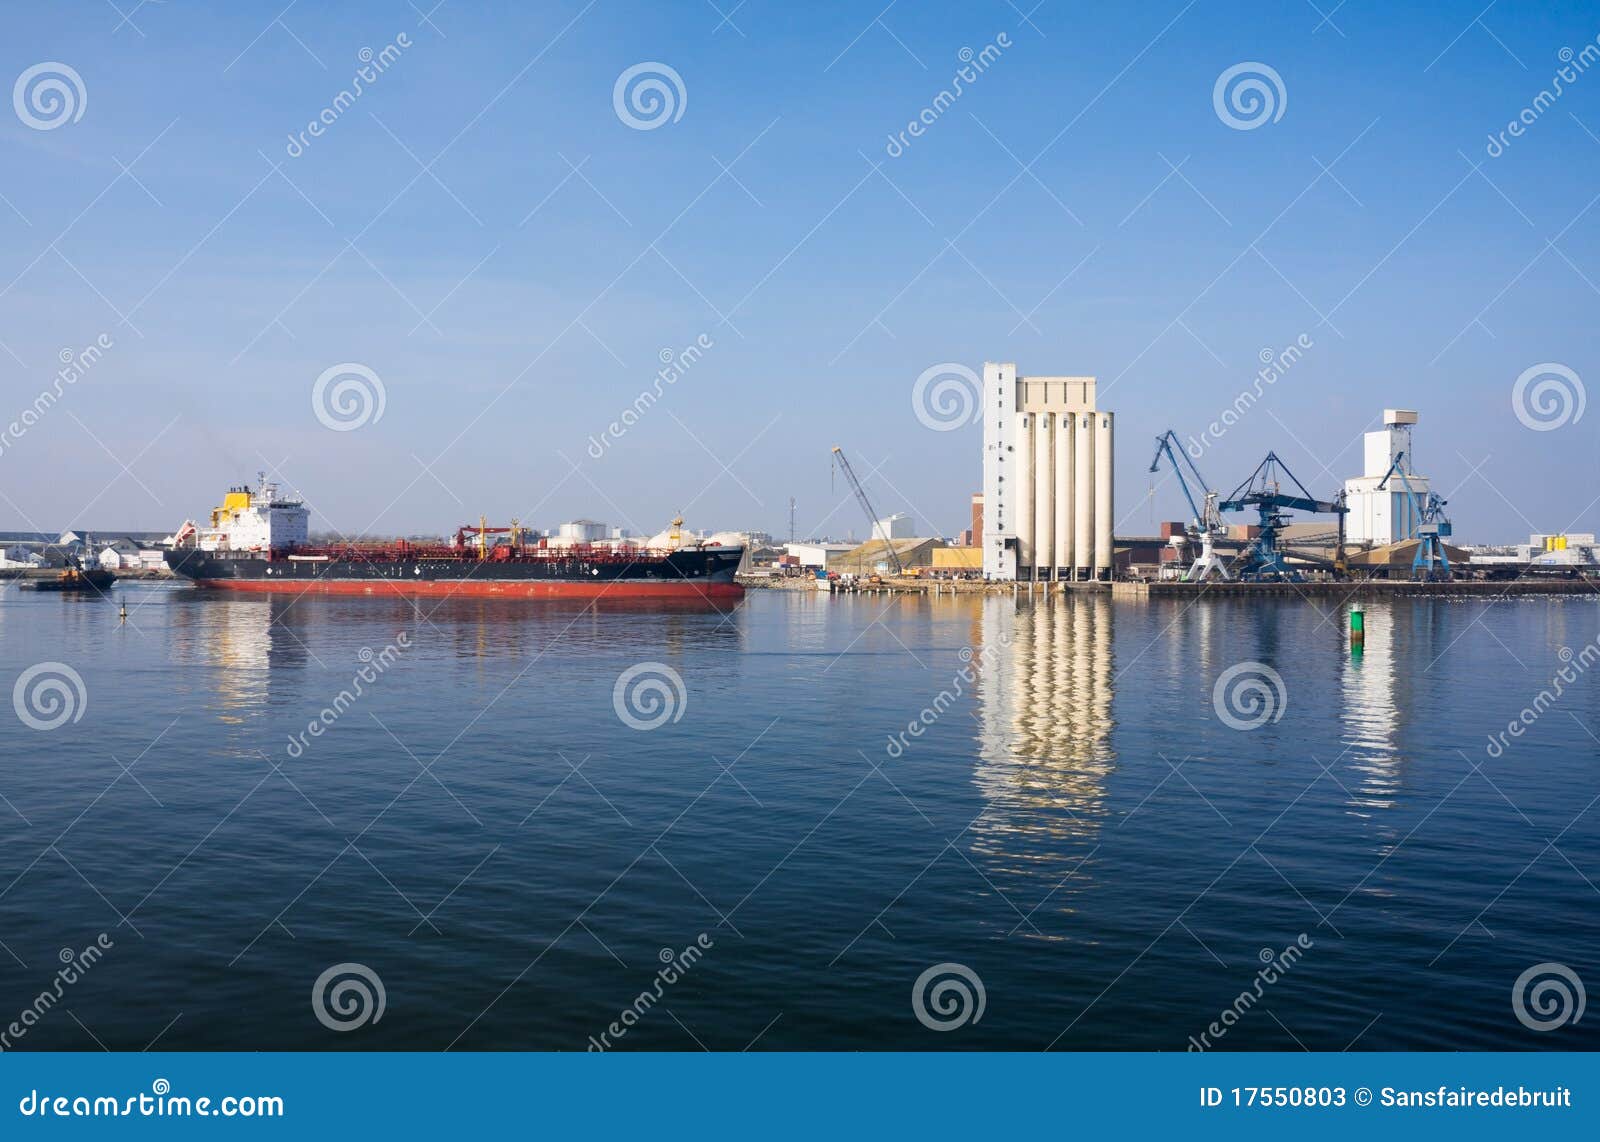 commercial harbour